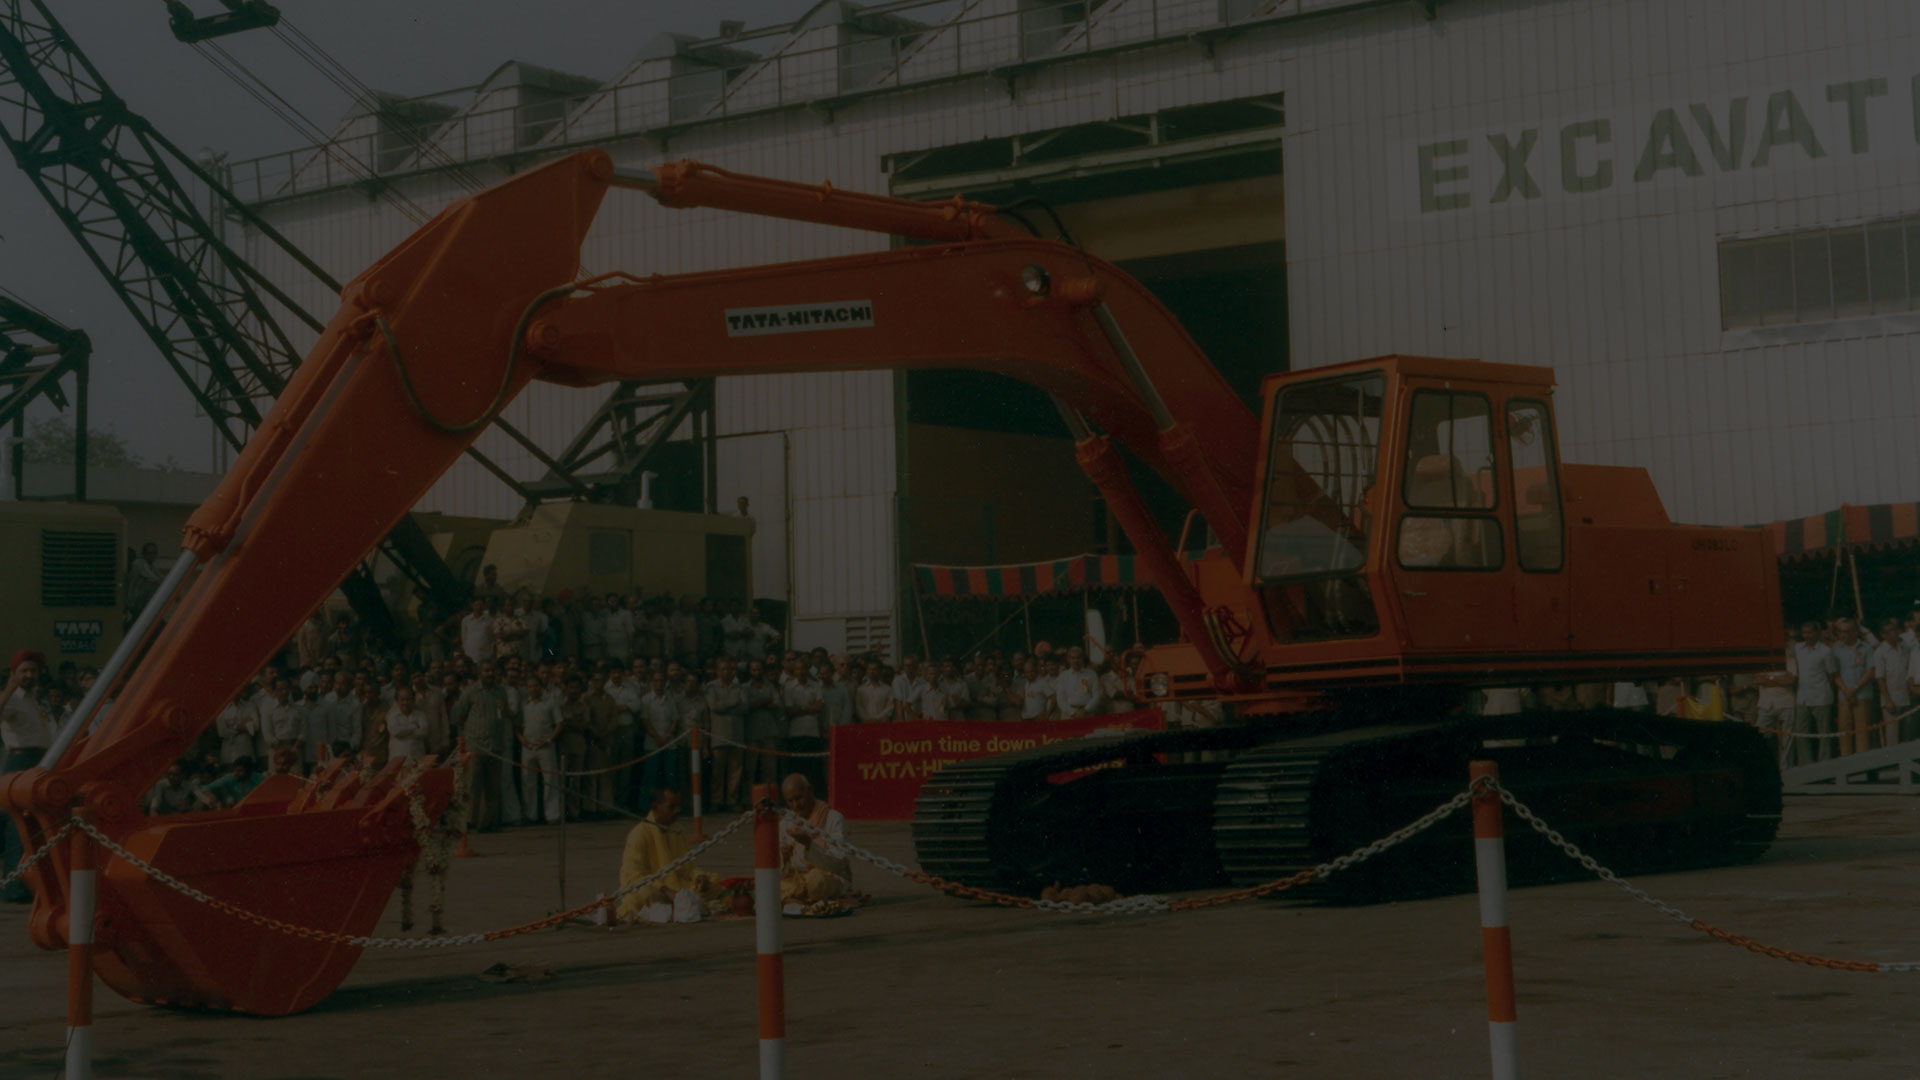 The first Tata Hitachi Excavator